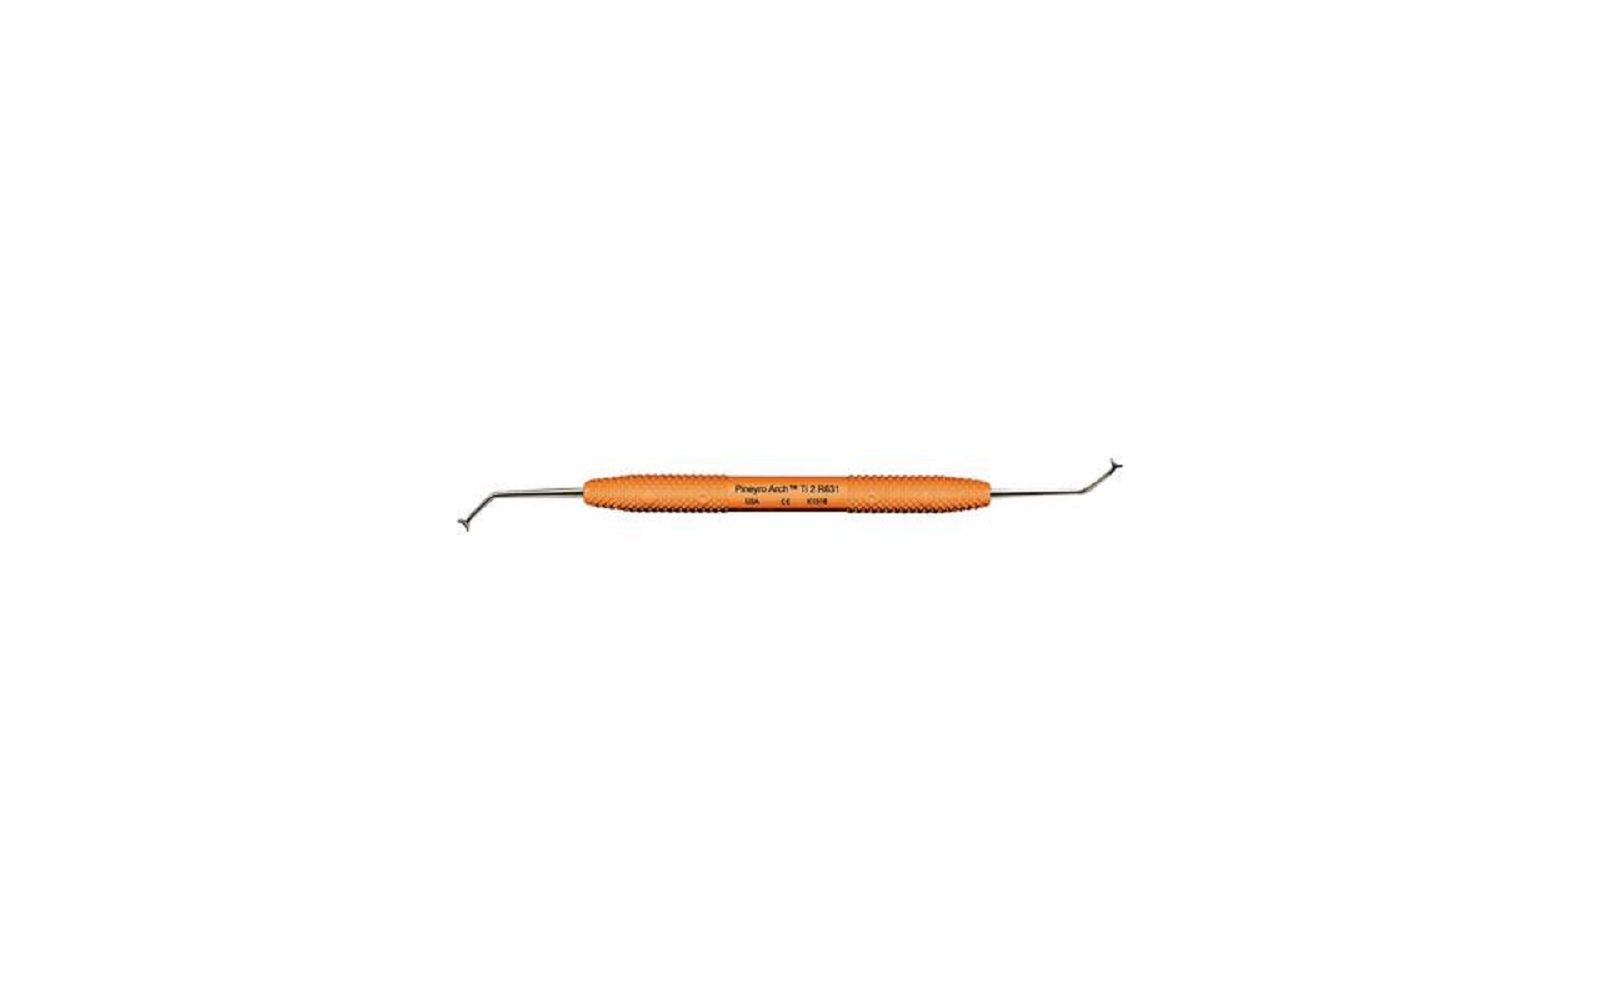 Pineyro arch™ ti instrument – # 2, posterior, orange resin handle, double end